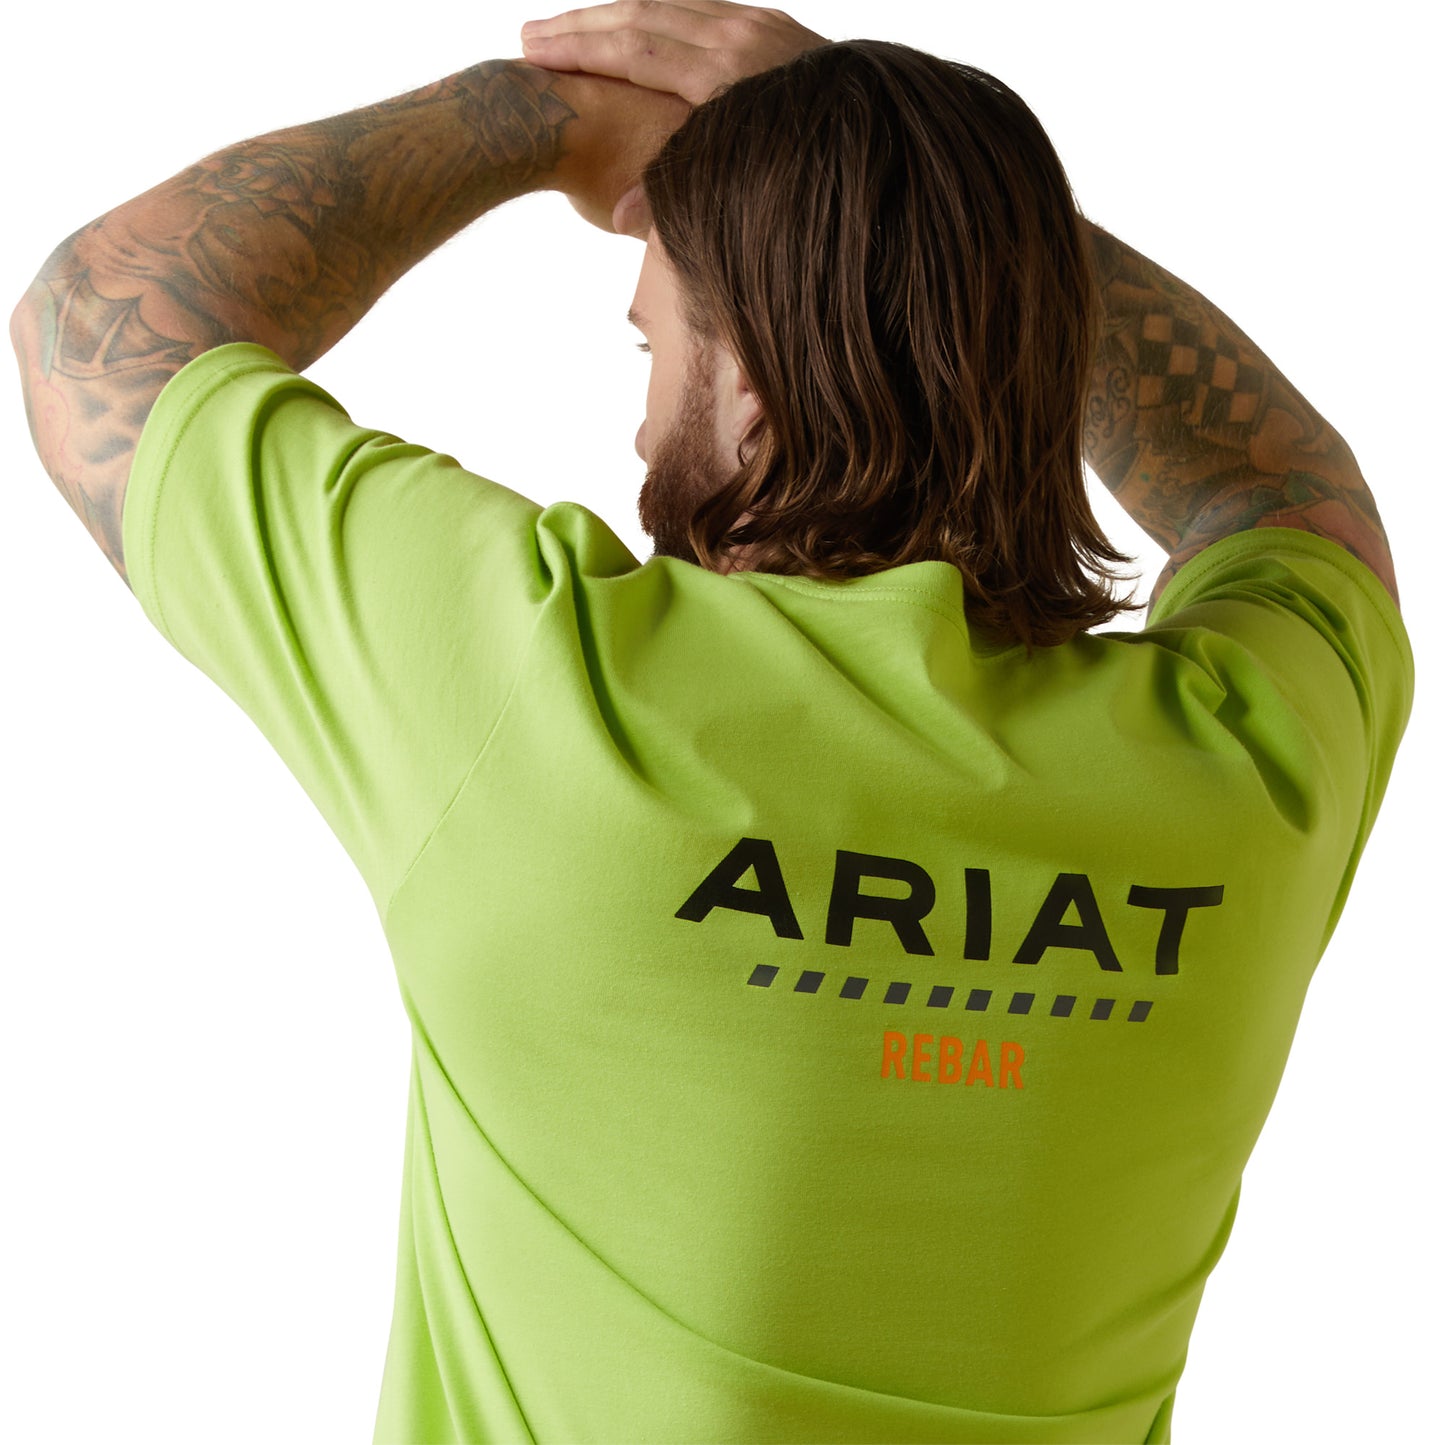 Ariat® Men's Rebar Cotton Strong™ Graphic Lime & Black T-Shirt 10043487